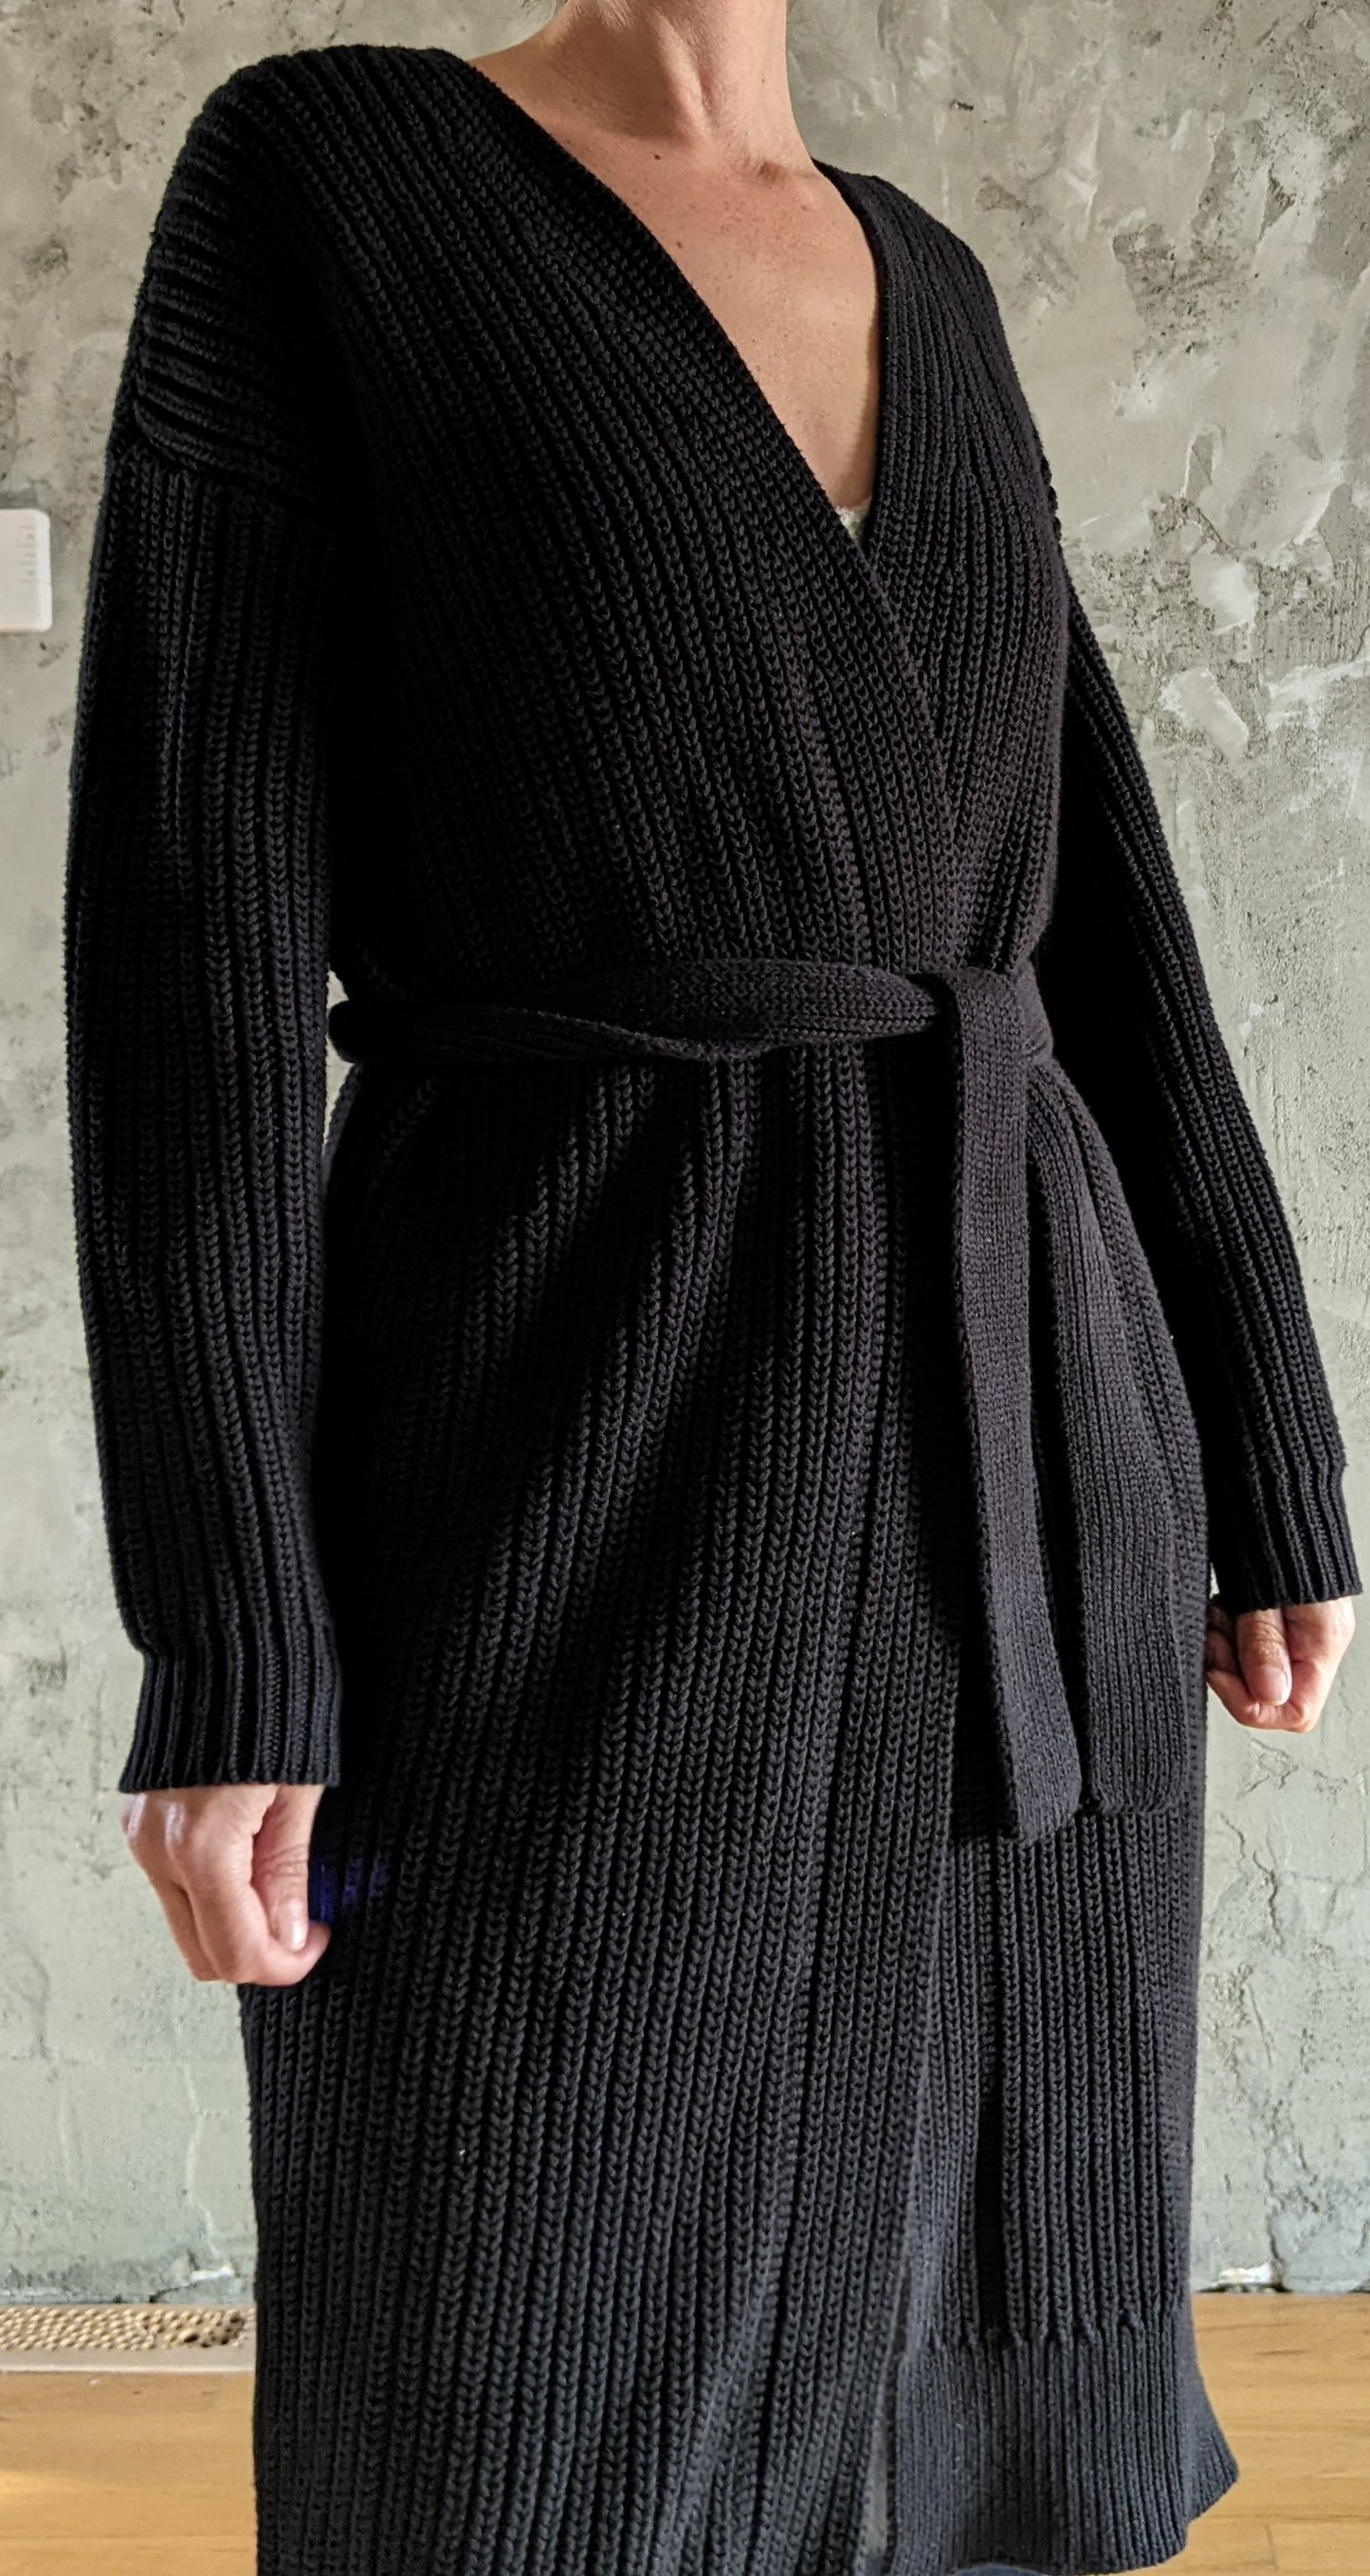 American Apparel black heavy sweater jacket sz XS/S.